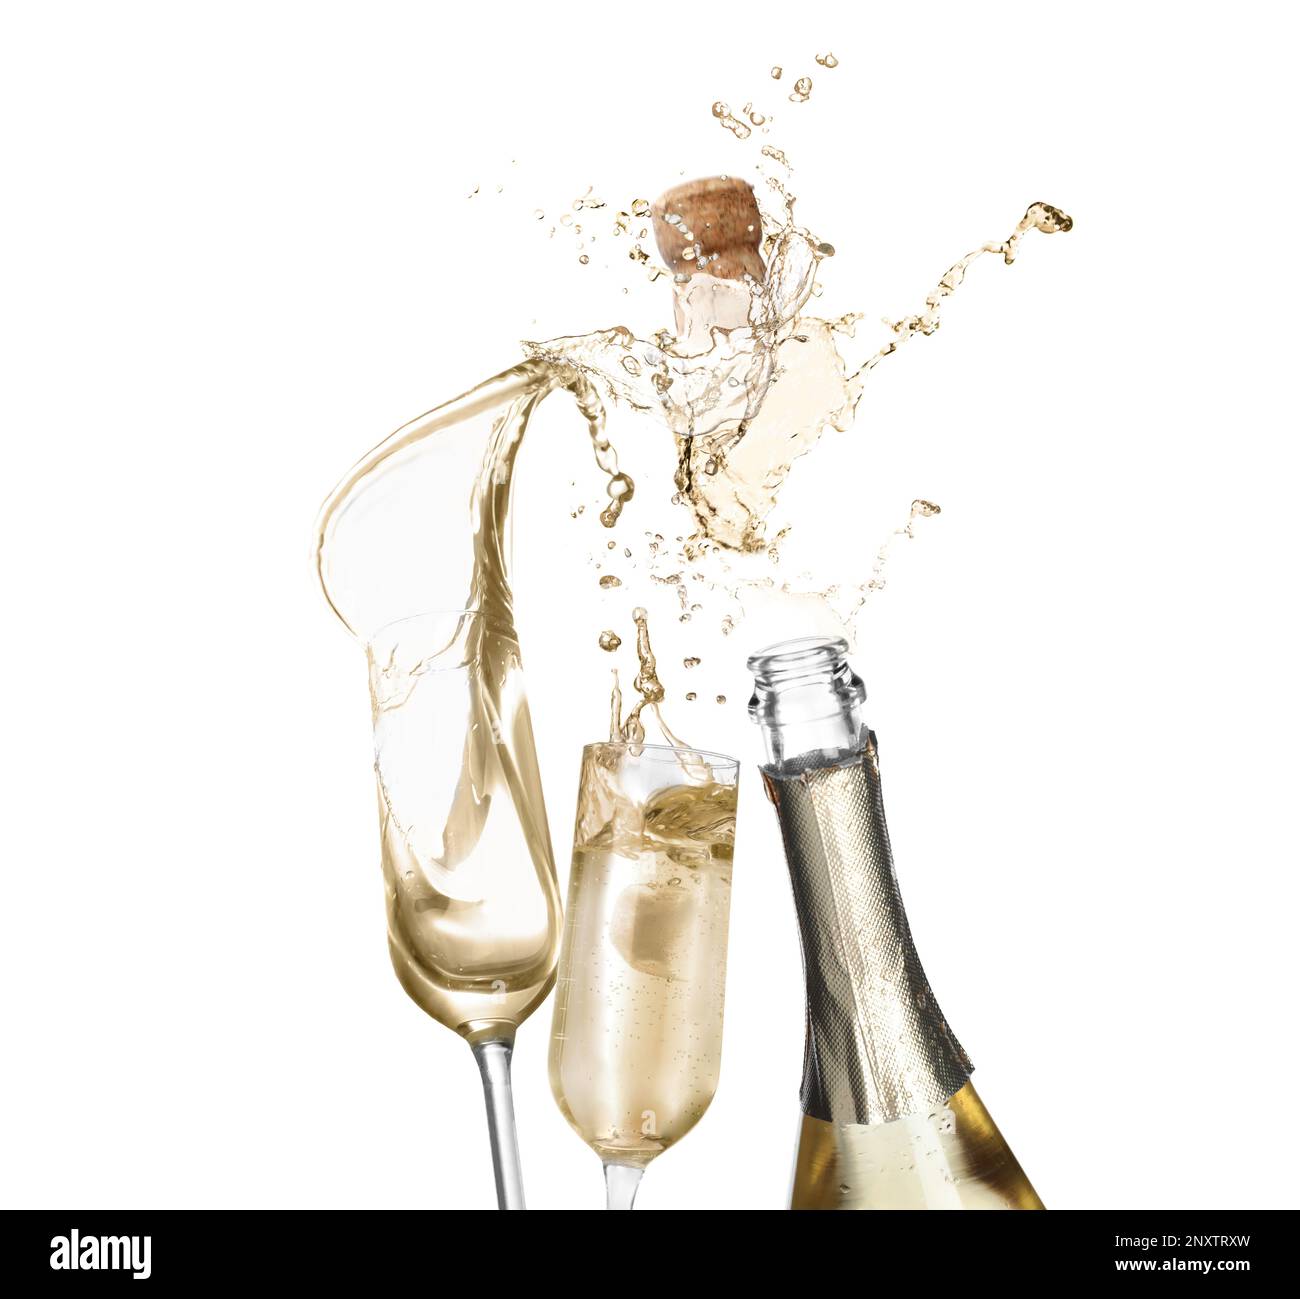 Sparkling wine splashing out of bottle and glasses on white background Stock Photo